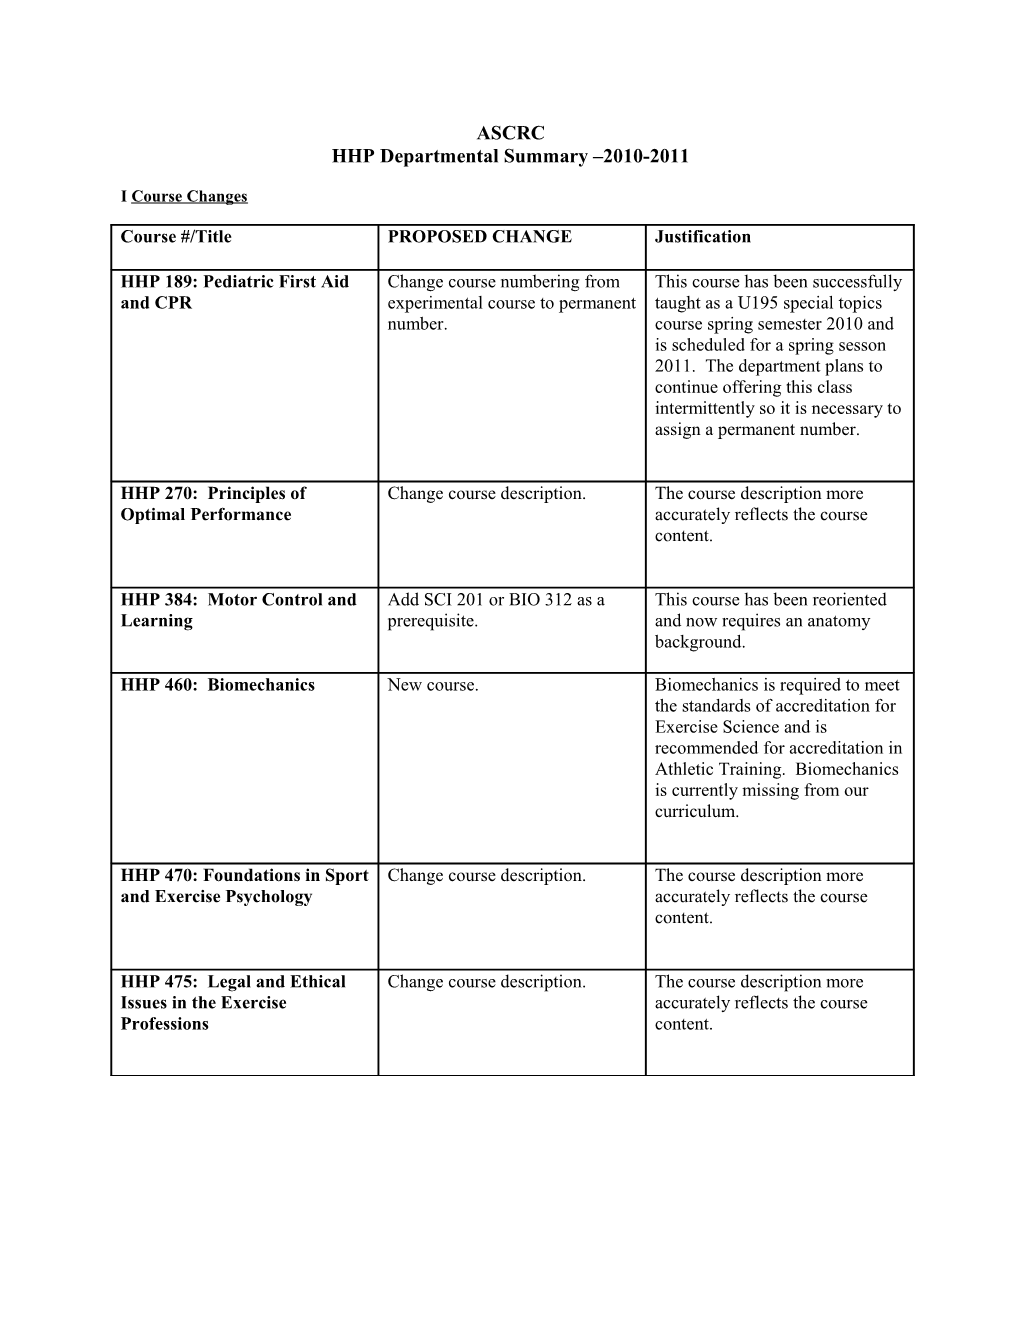 HHP Departmental Summary 2010-2011